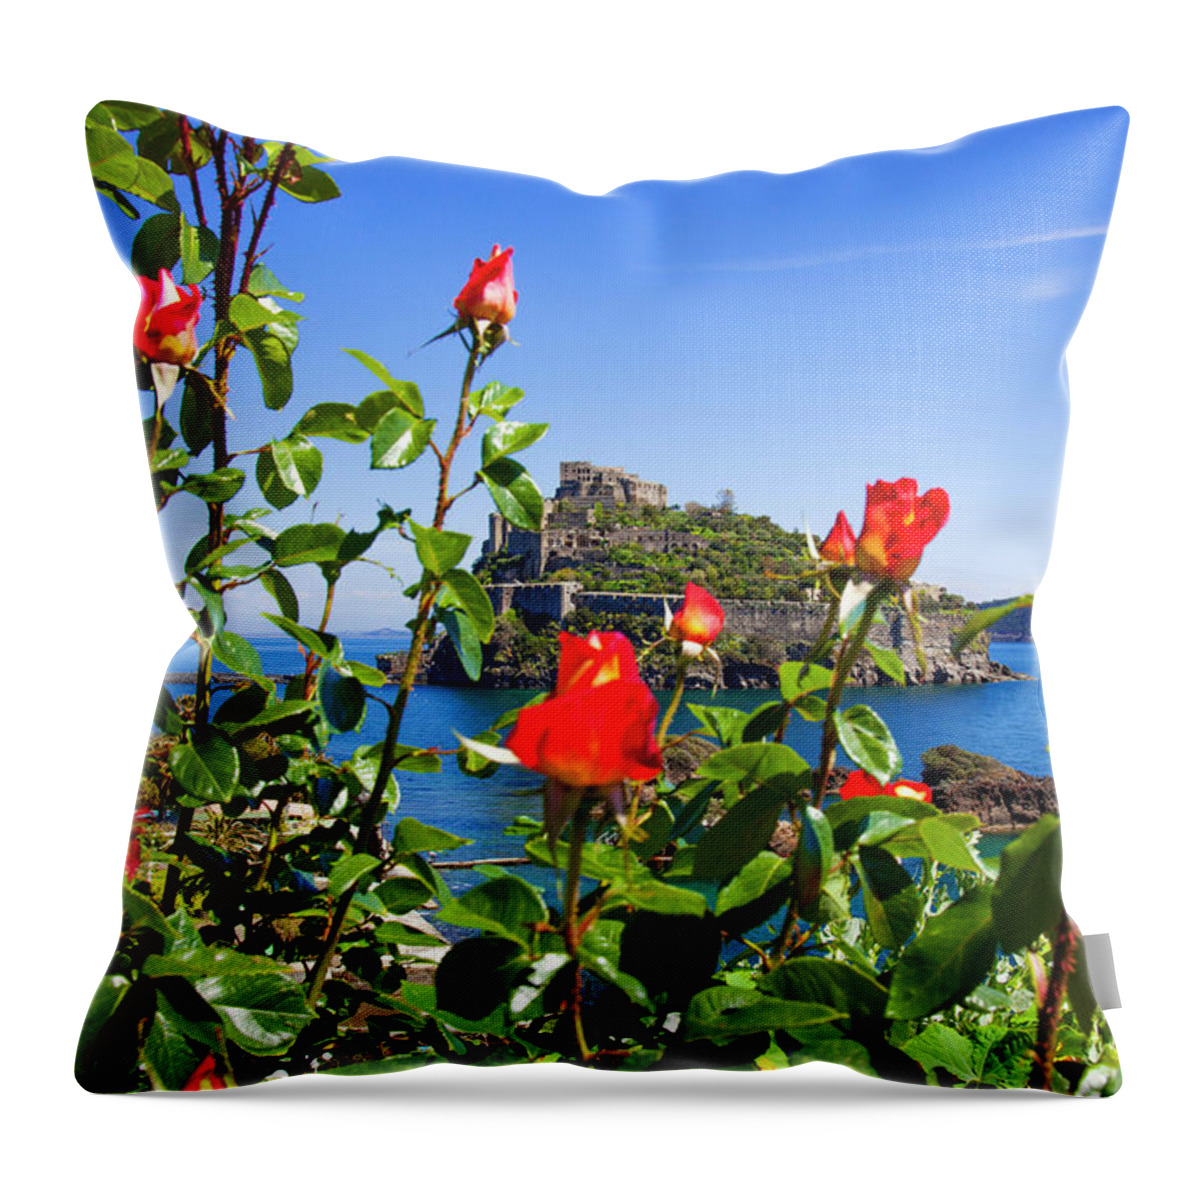 Estock Throw Pillow featuring the digital art Coastal Garden, Naples, Italy by Johanna Huber